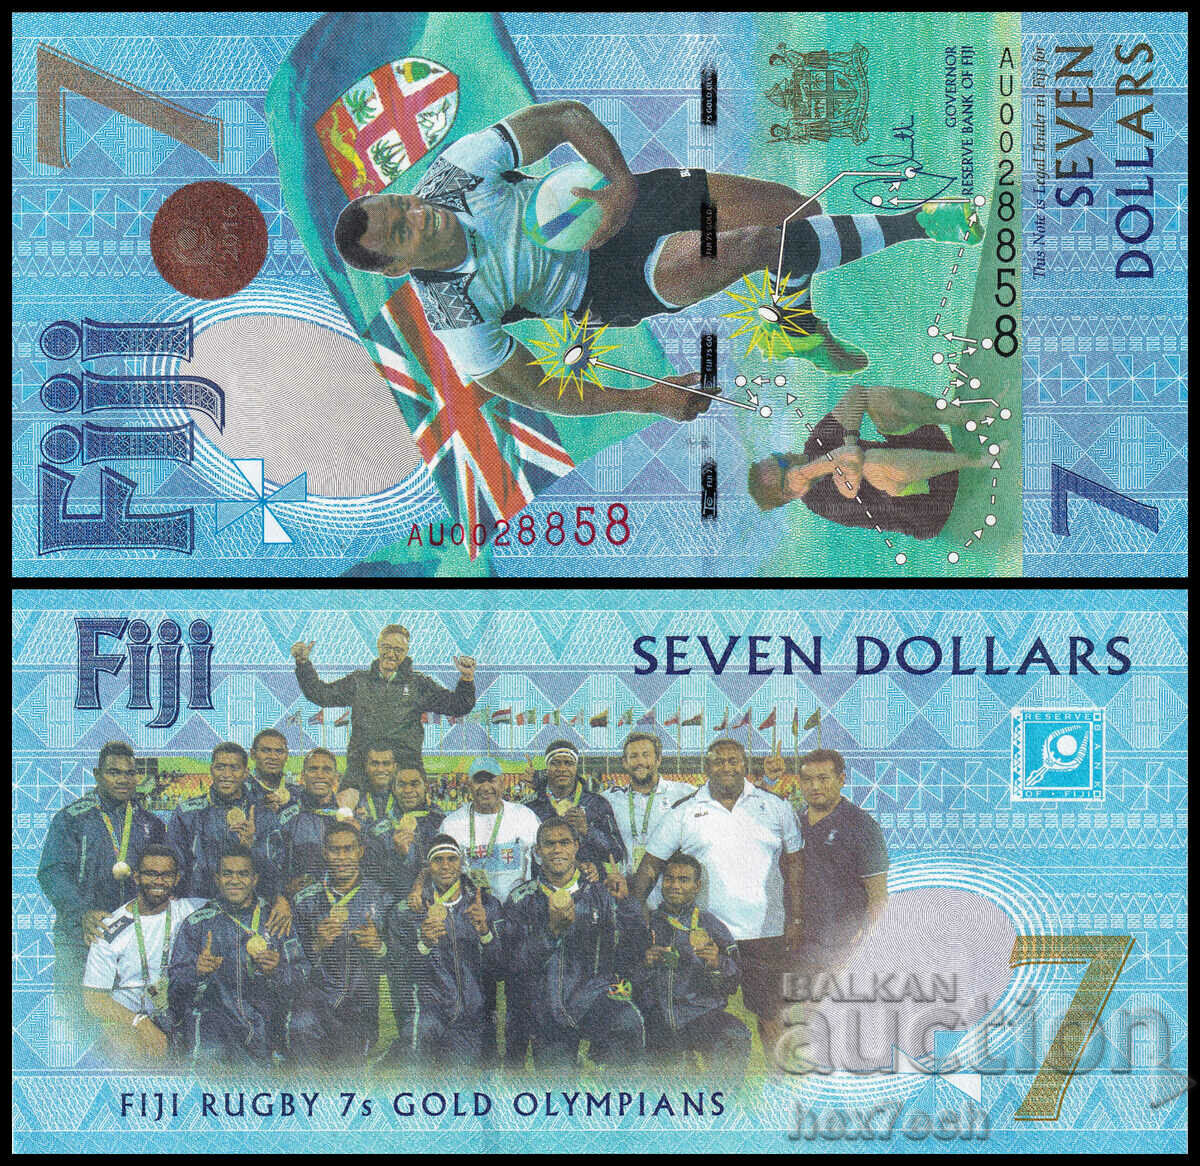 ❤️ ⭐ Fiji 2016 $7 Anniversary UNC New ⭐ ❤️